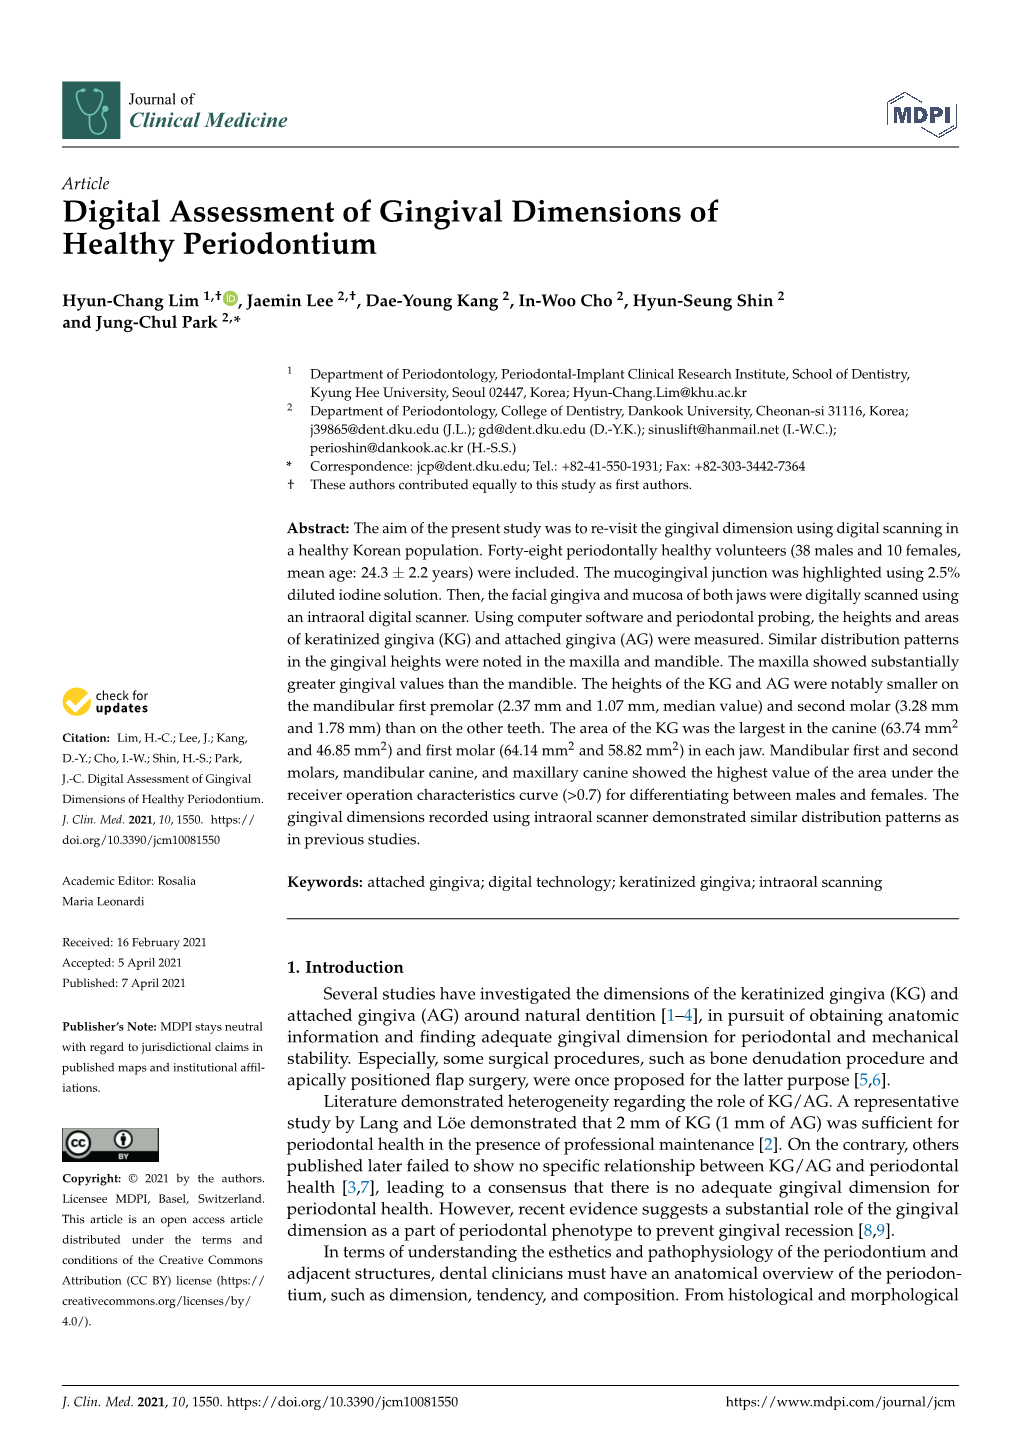 Digital Assessment of Gingival Dimensions of Healthy Periodontium